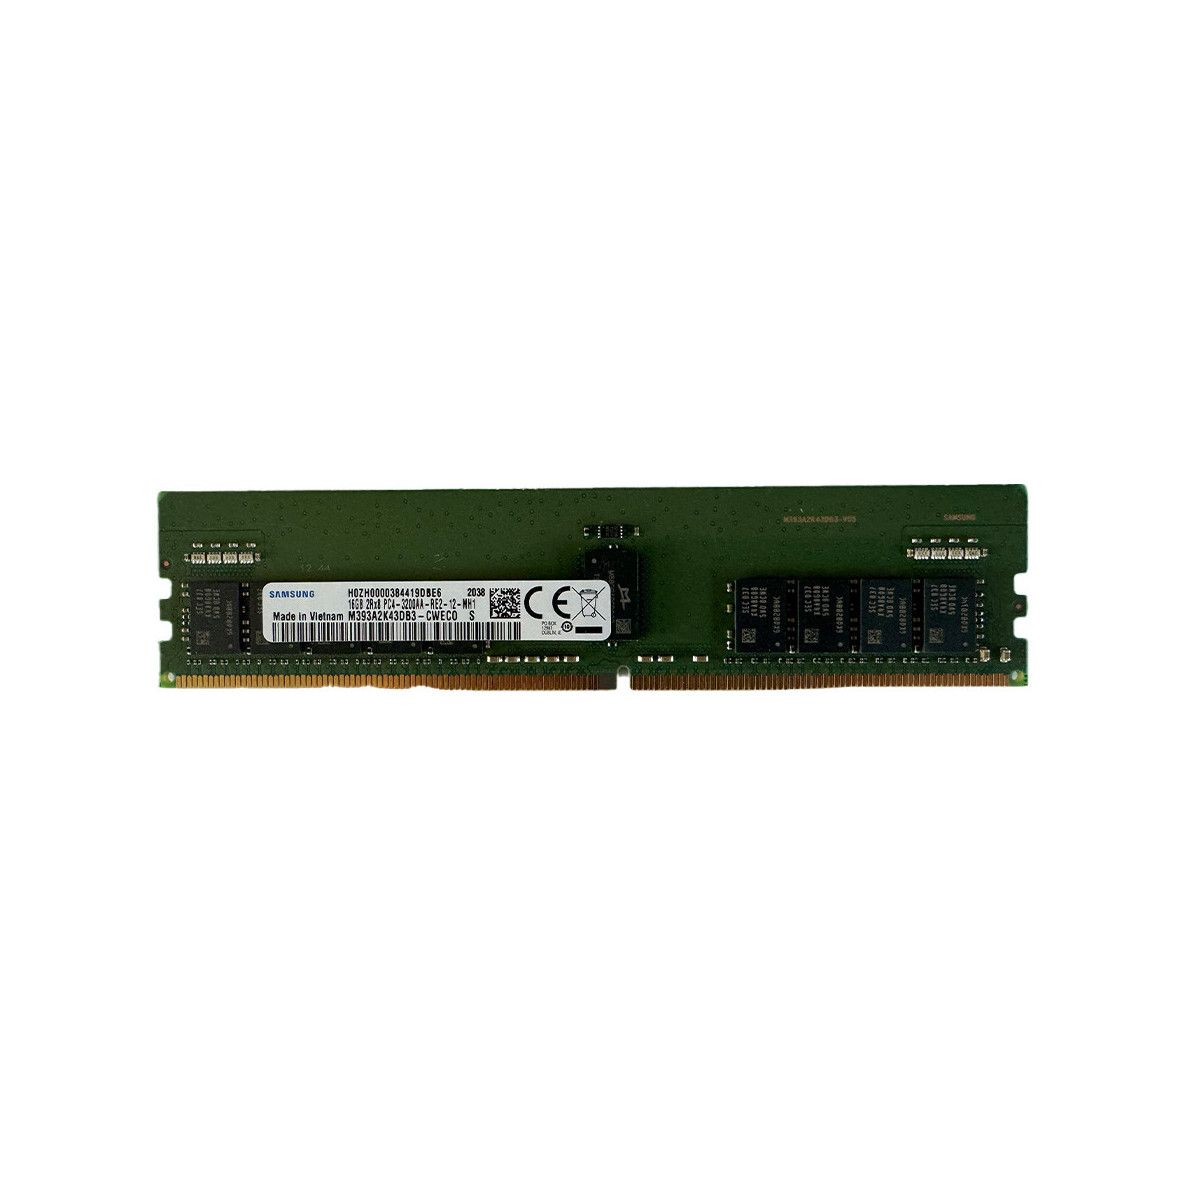 AB214251-MS - Memstar 1x 16GB DDR4-3200 RDIMM PC4-25600R - Mem-Star Kompatybilna pamięć OEM 1 - Memstar 